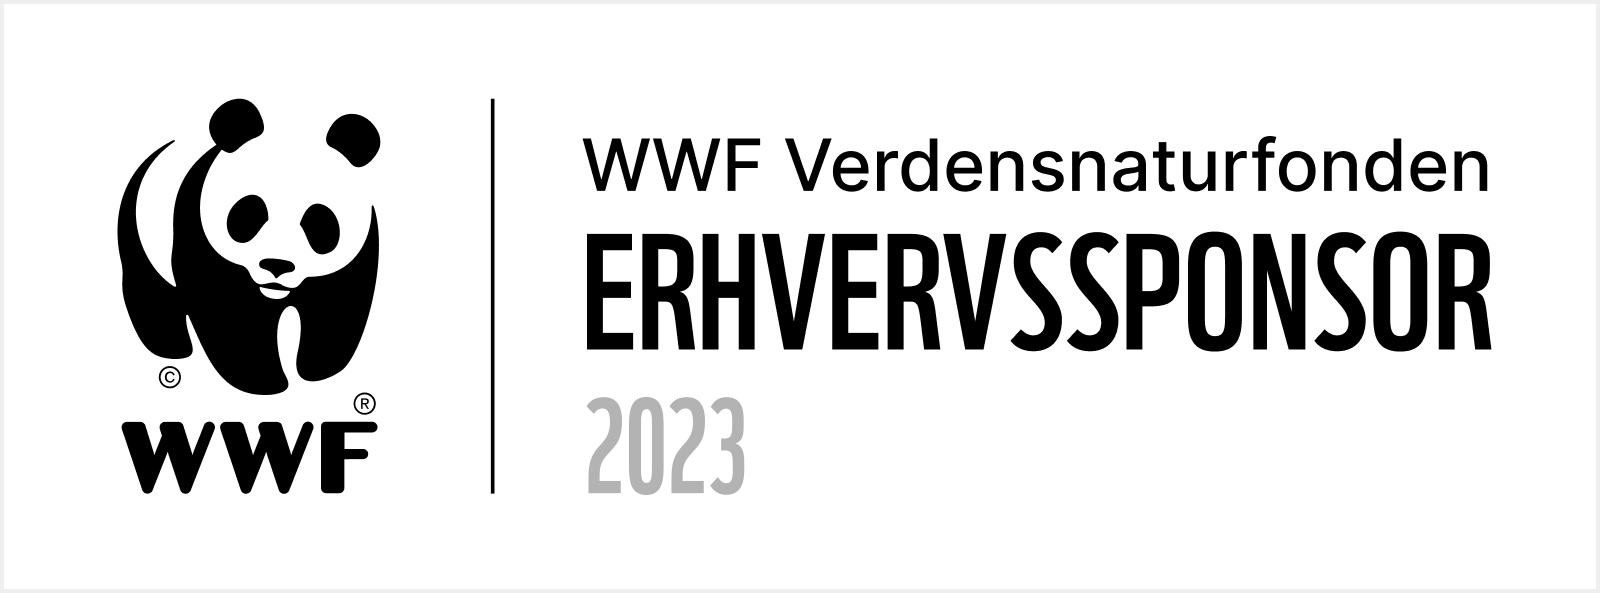 Feriecenter Slettestrand er WWF Verdensnaturfonden Erhvervssponsor 2023